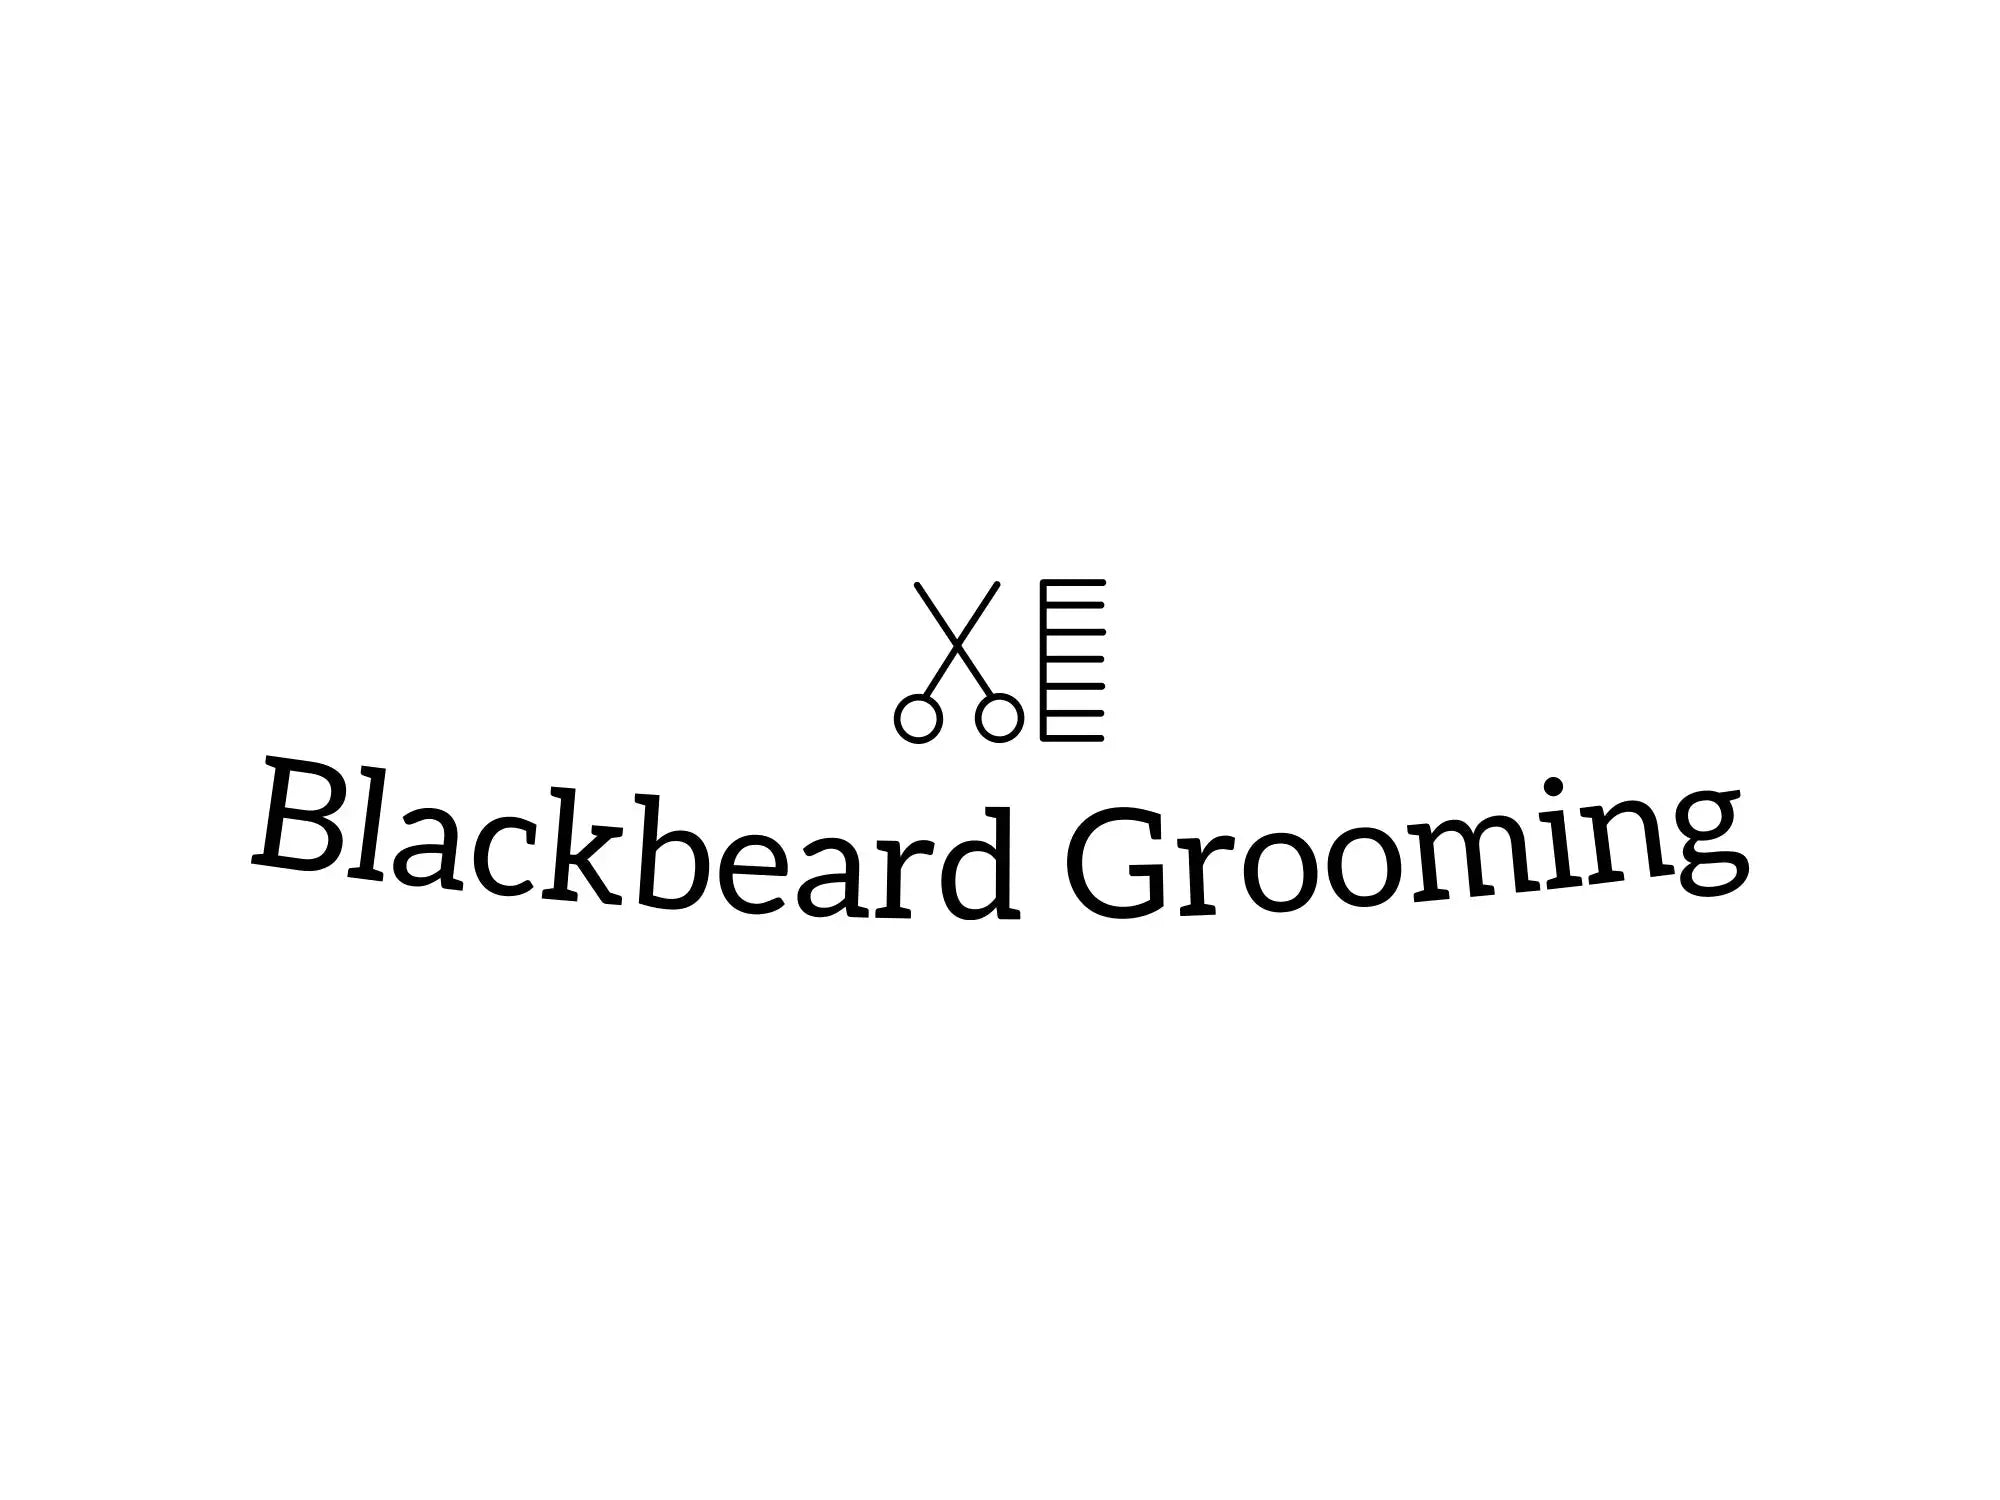 The Art of Beard care with Blackbeard’s - BlackBeards Grooming